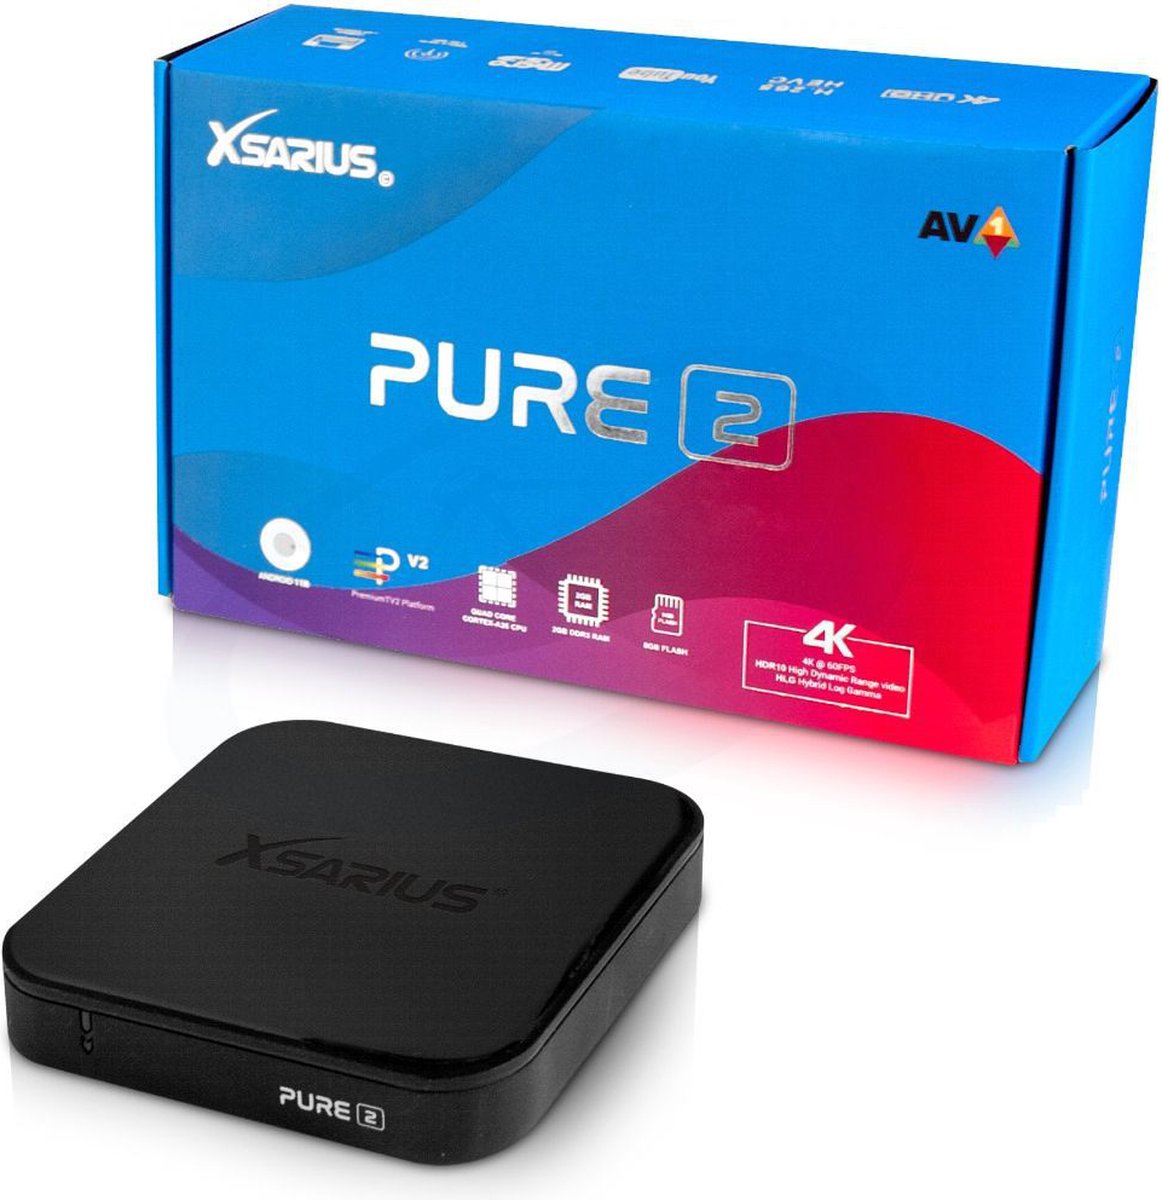 Xsarius Pure 2 - 4K UHD - Android 11 Media Player - iptv - Android Box |  bol.com